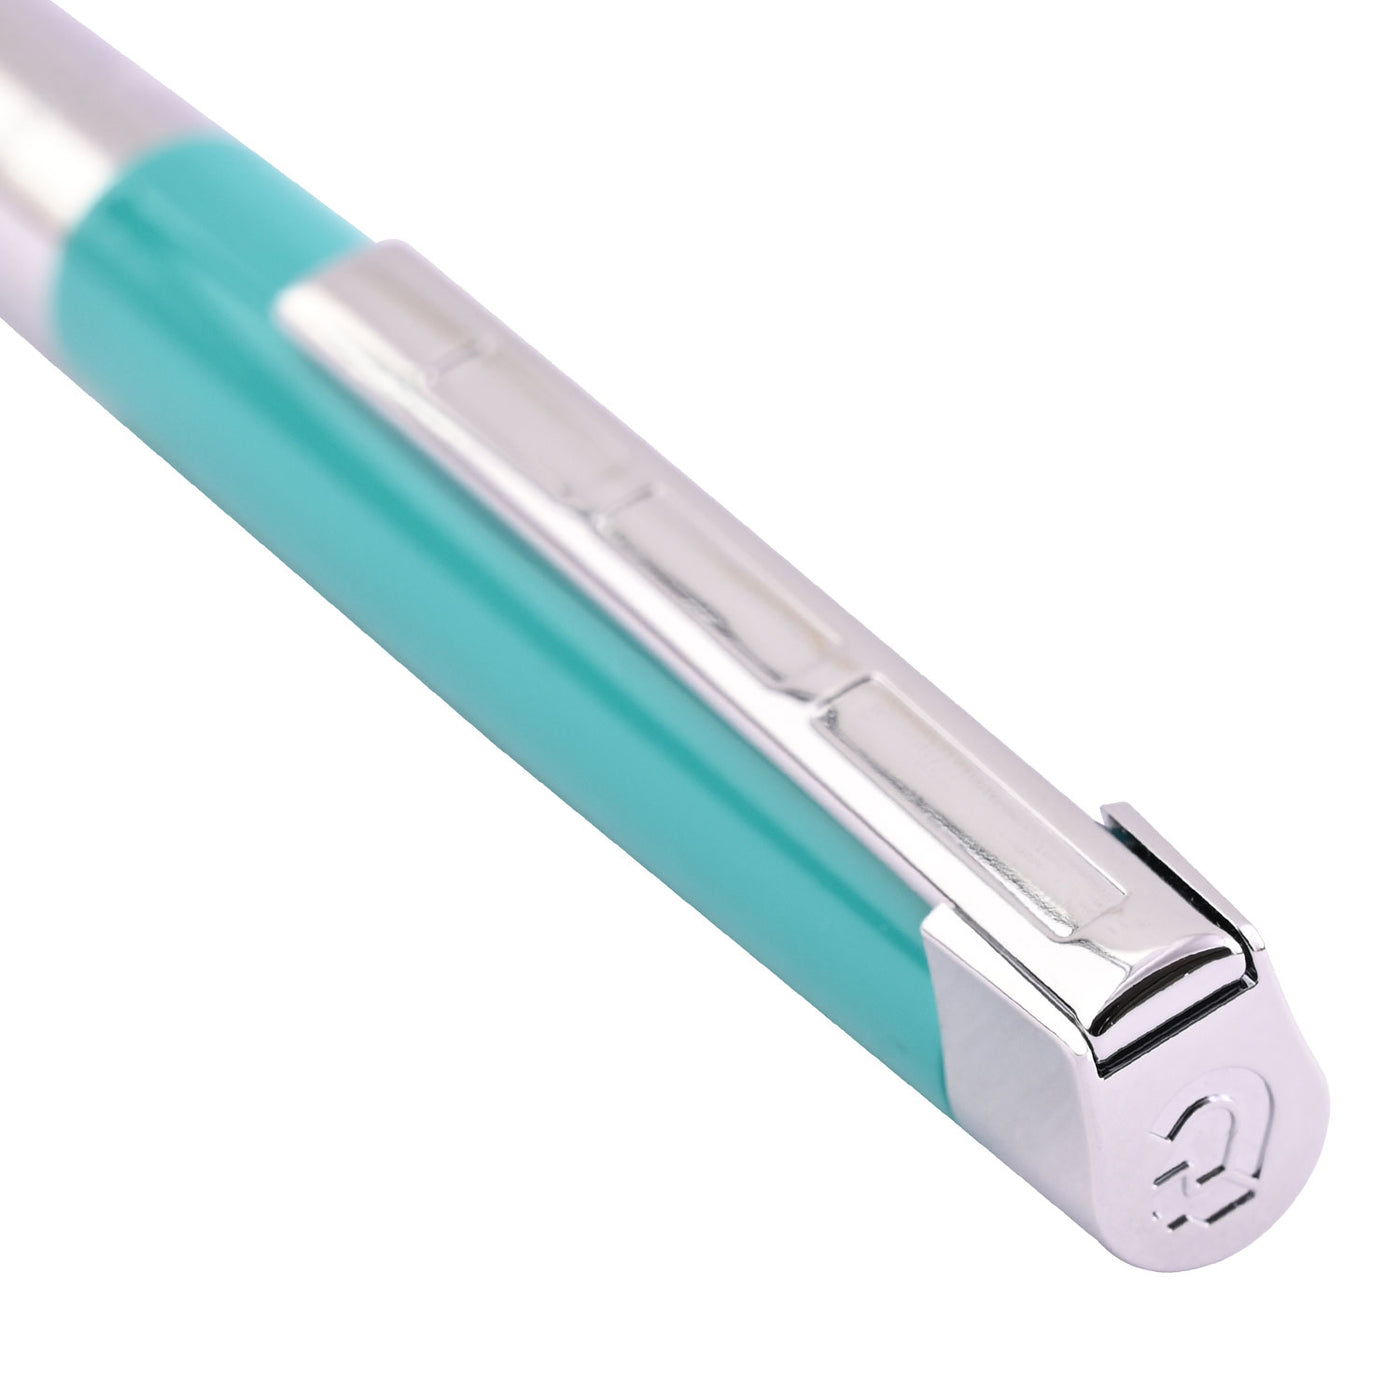 Staedtler Premium Resina 0.7mm Mechanical Pencil - Turquoise CT 4